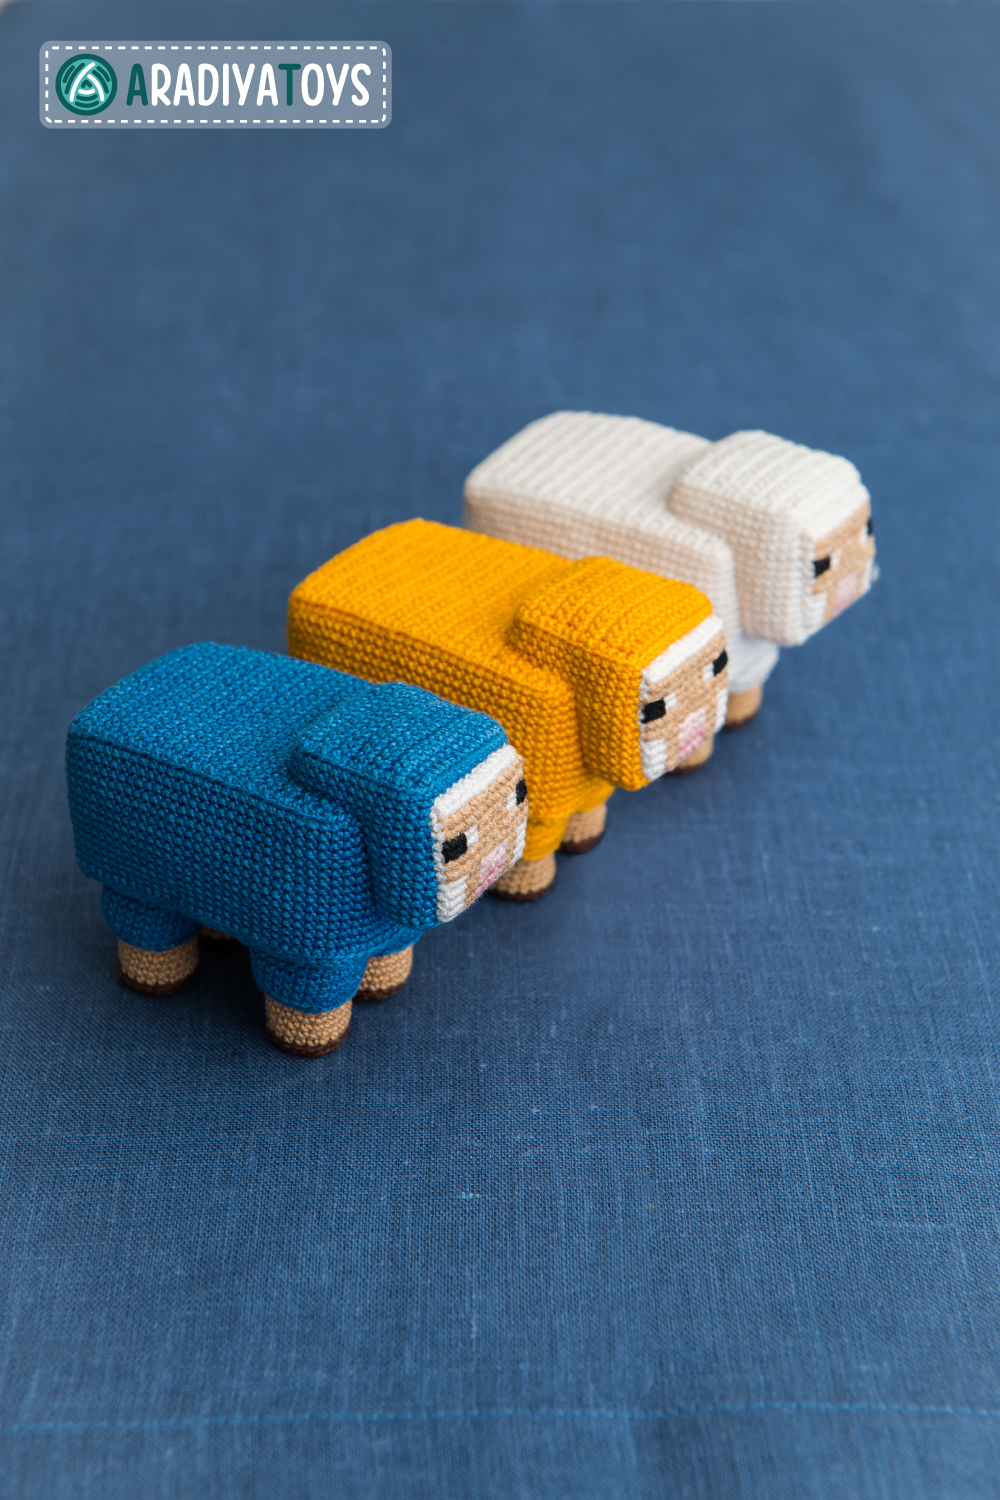 Minecraft Crochet Dolls, In Case The Original In-Game Creatures Weren’t Charming Enough